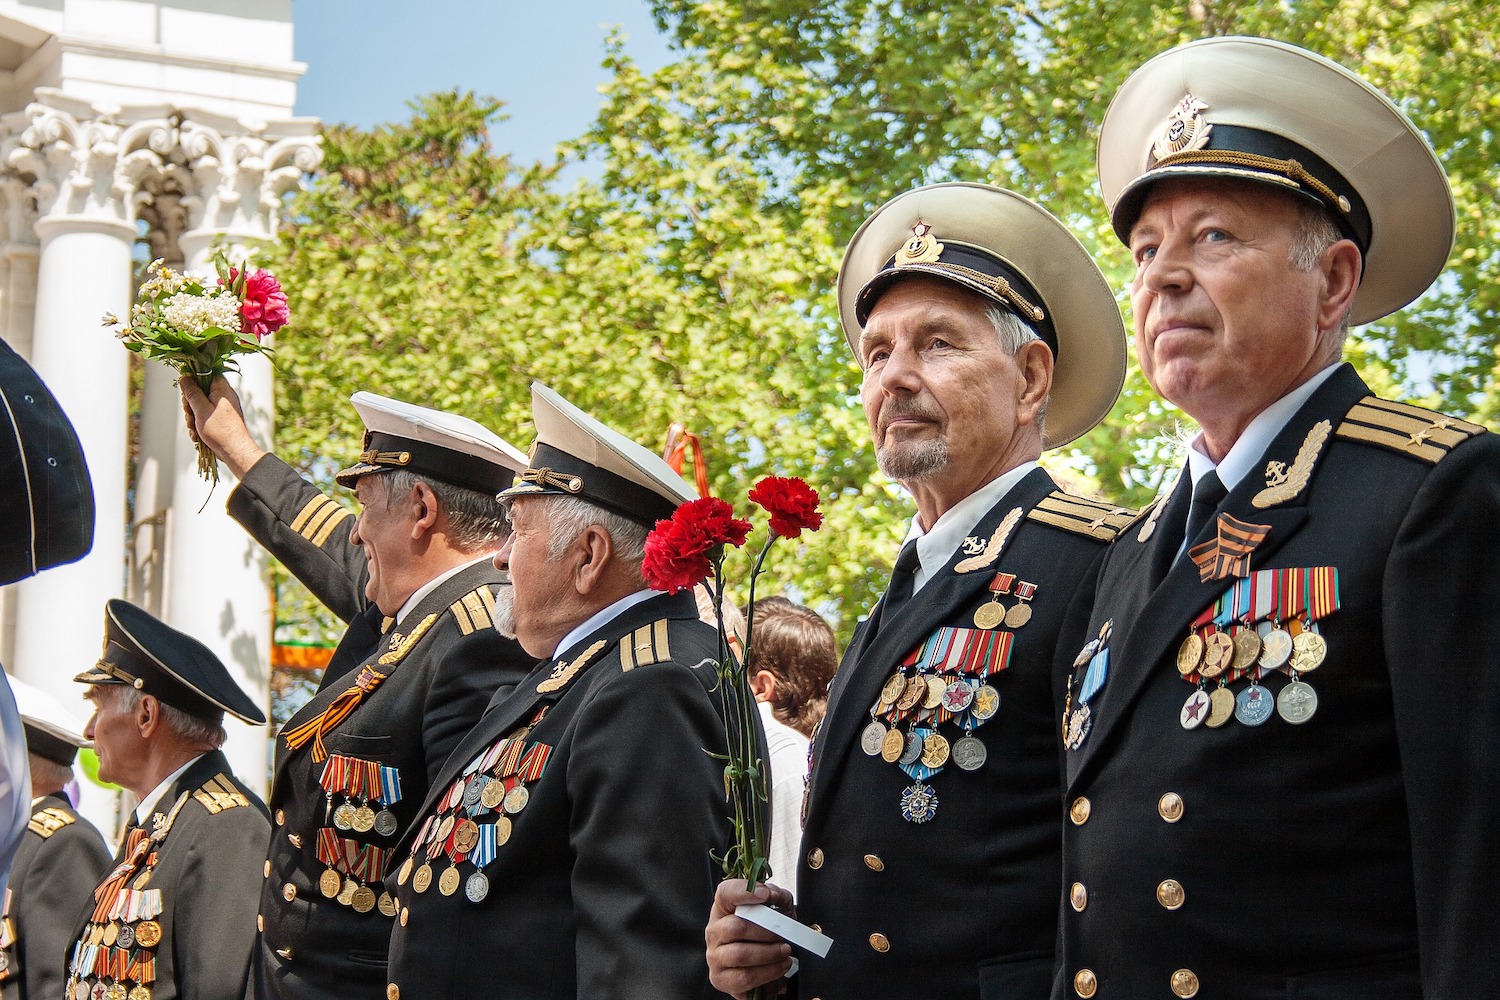 Veterans meet on Victory Day. Image: Svetlana Novikova/Pixabay under a CC licence.